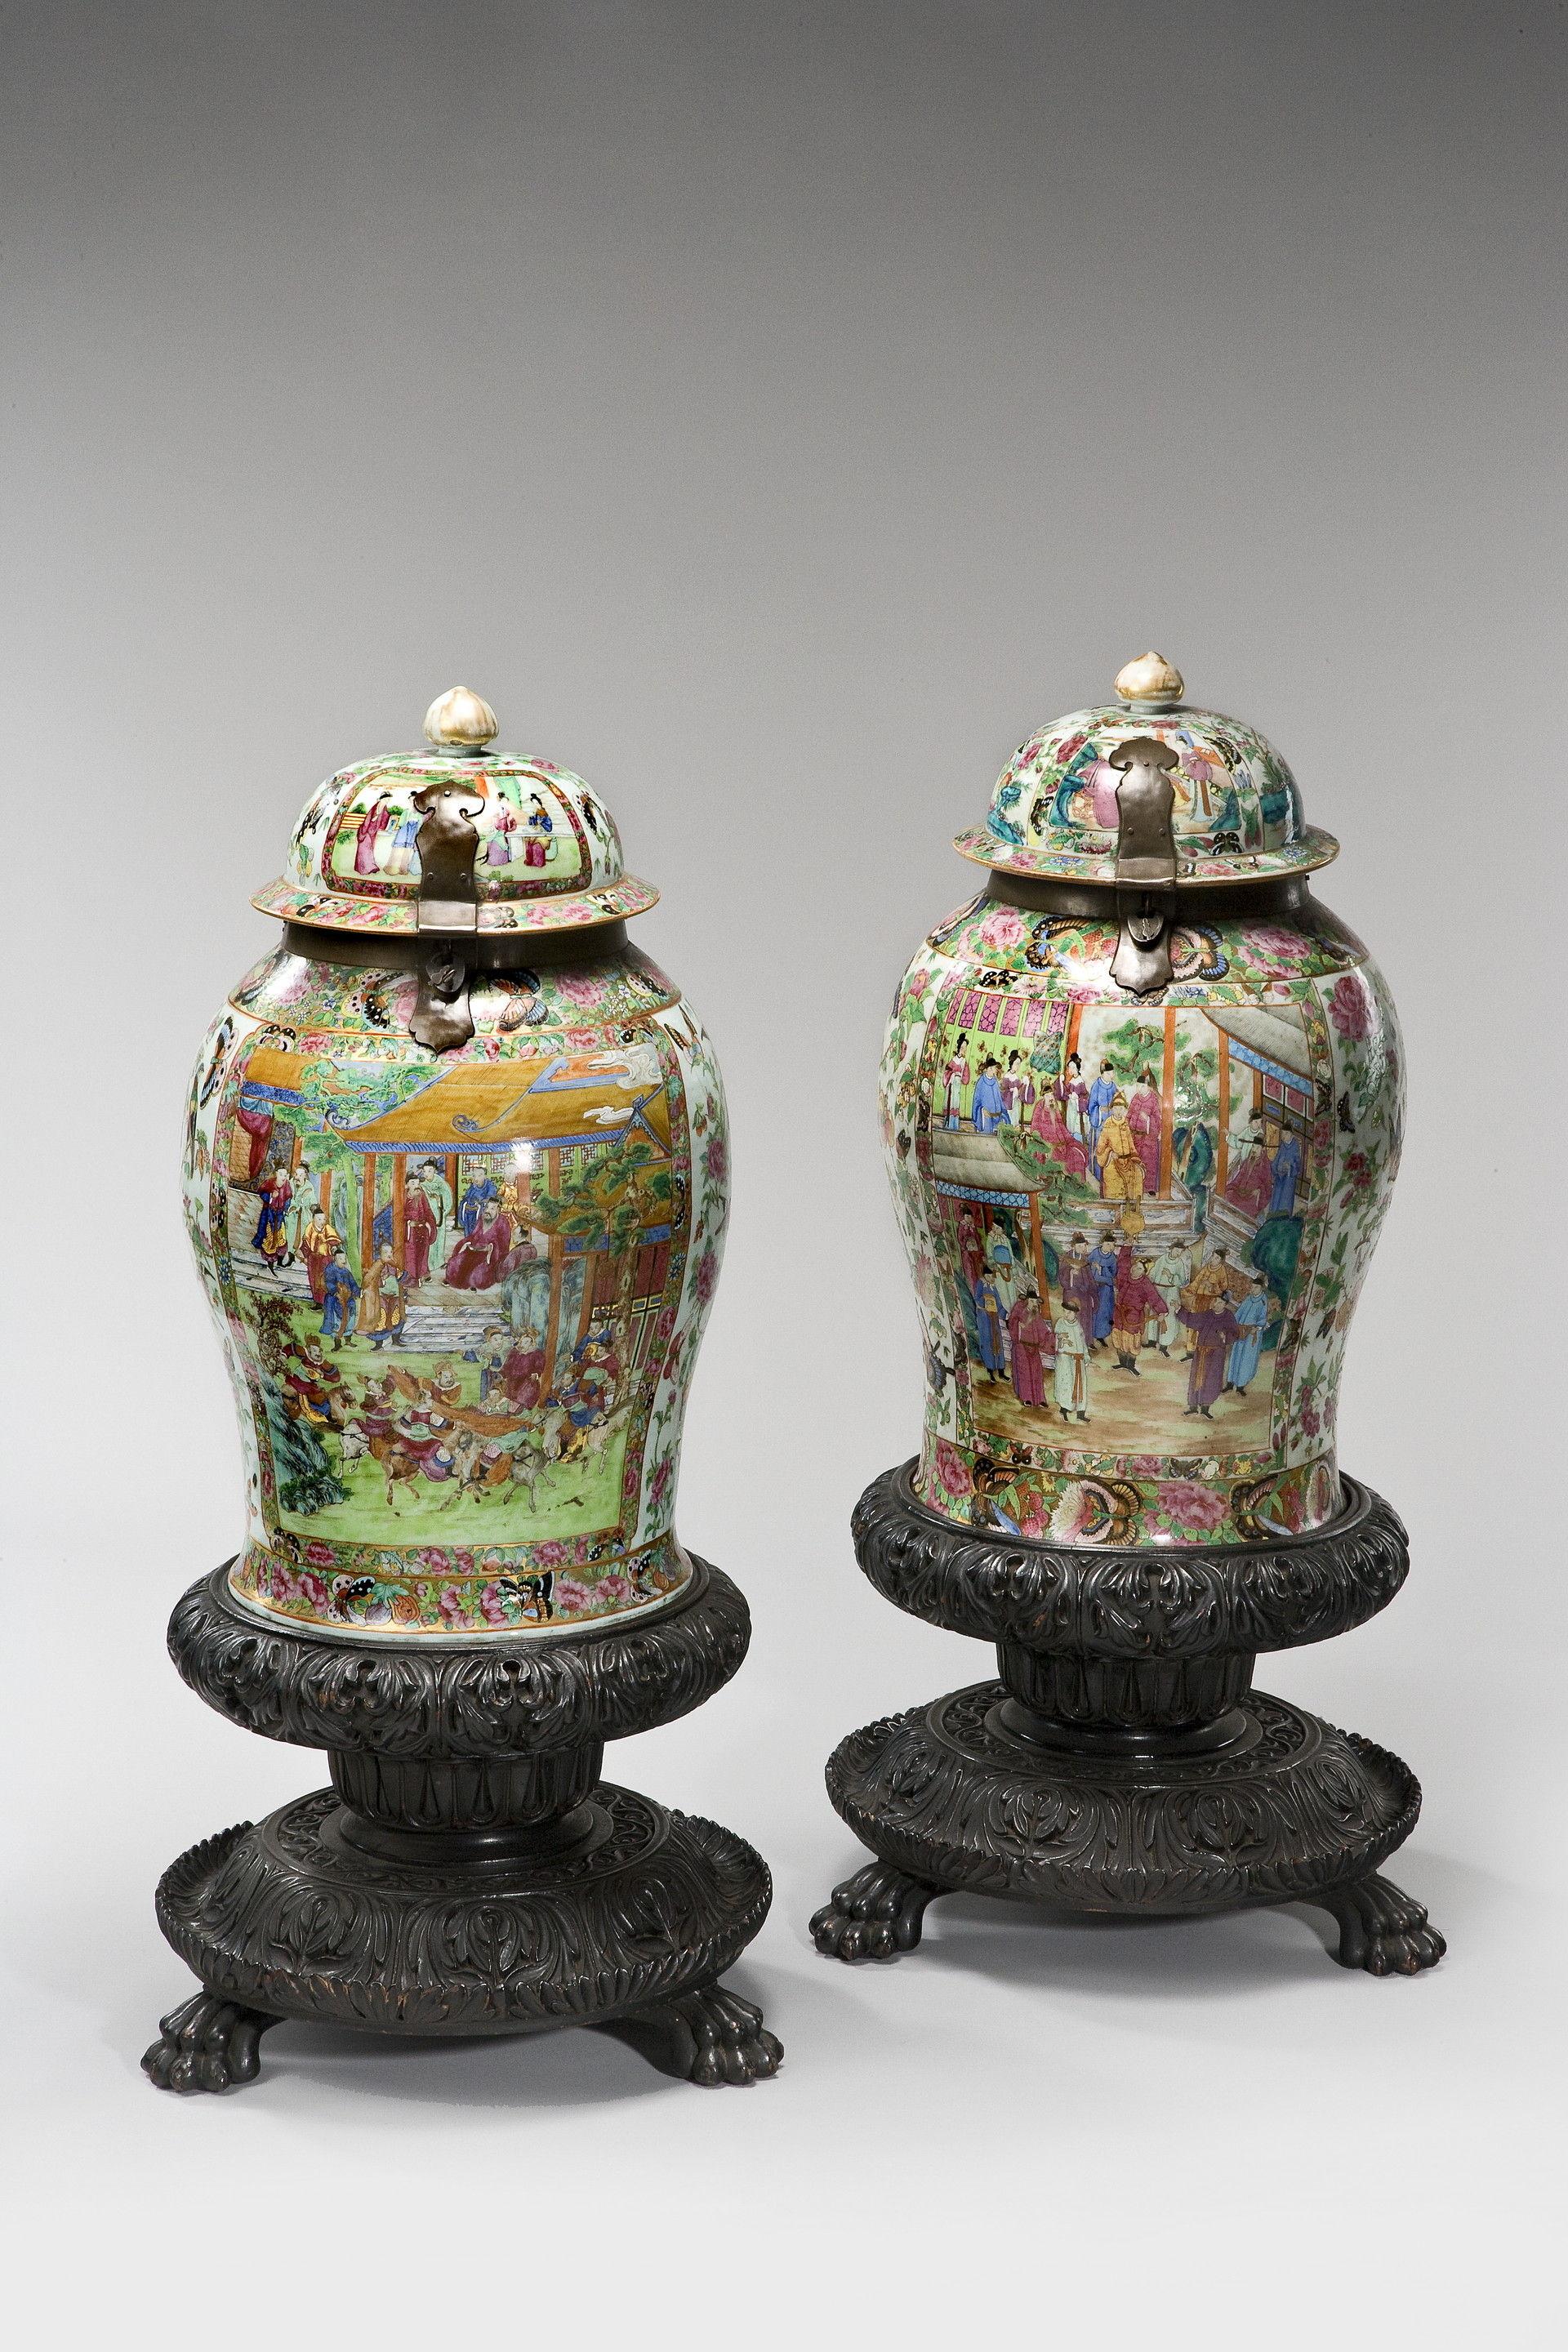 Matched pair of Cantonese enameled porcelain standing jar. On original hardwood bases.